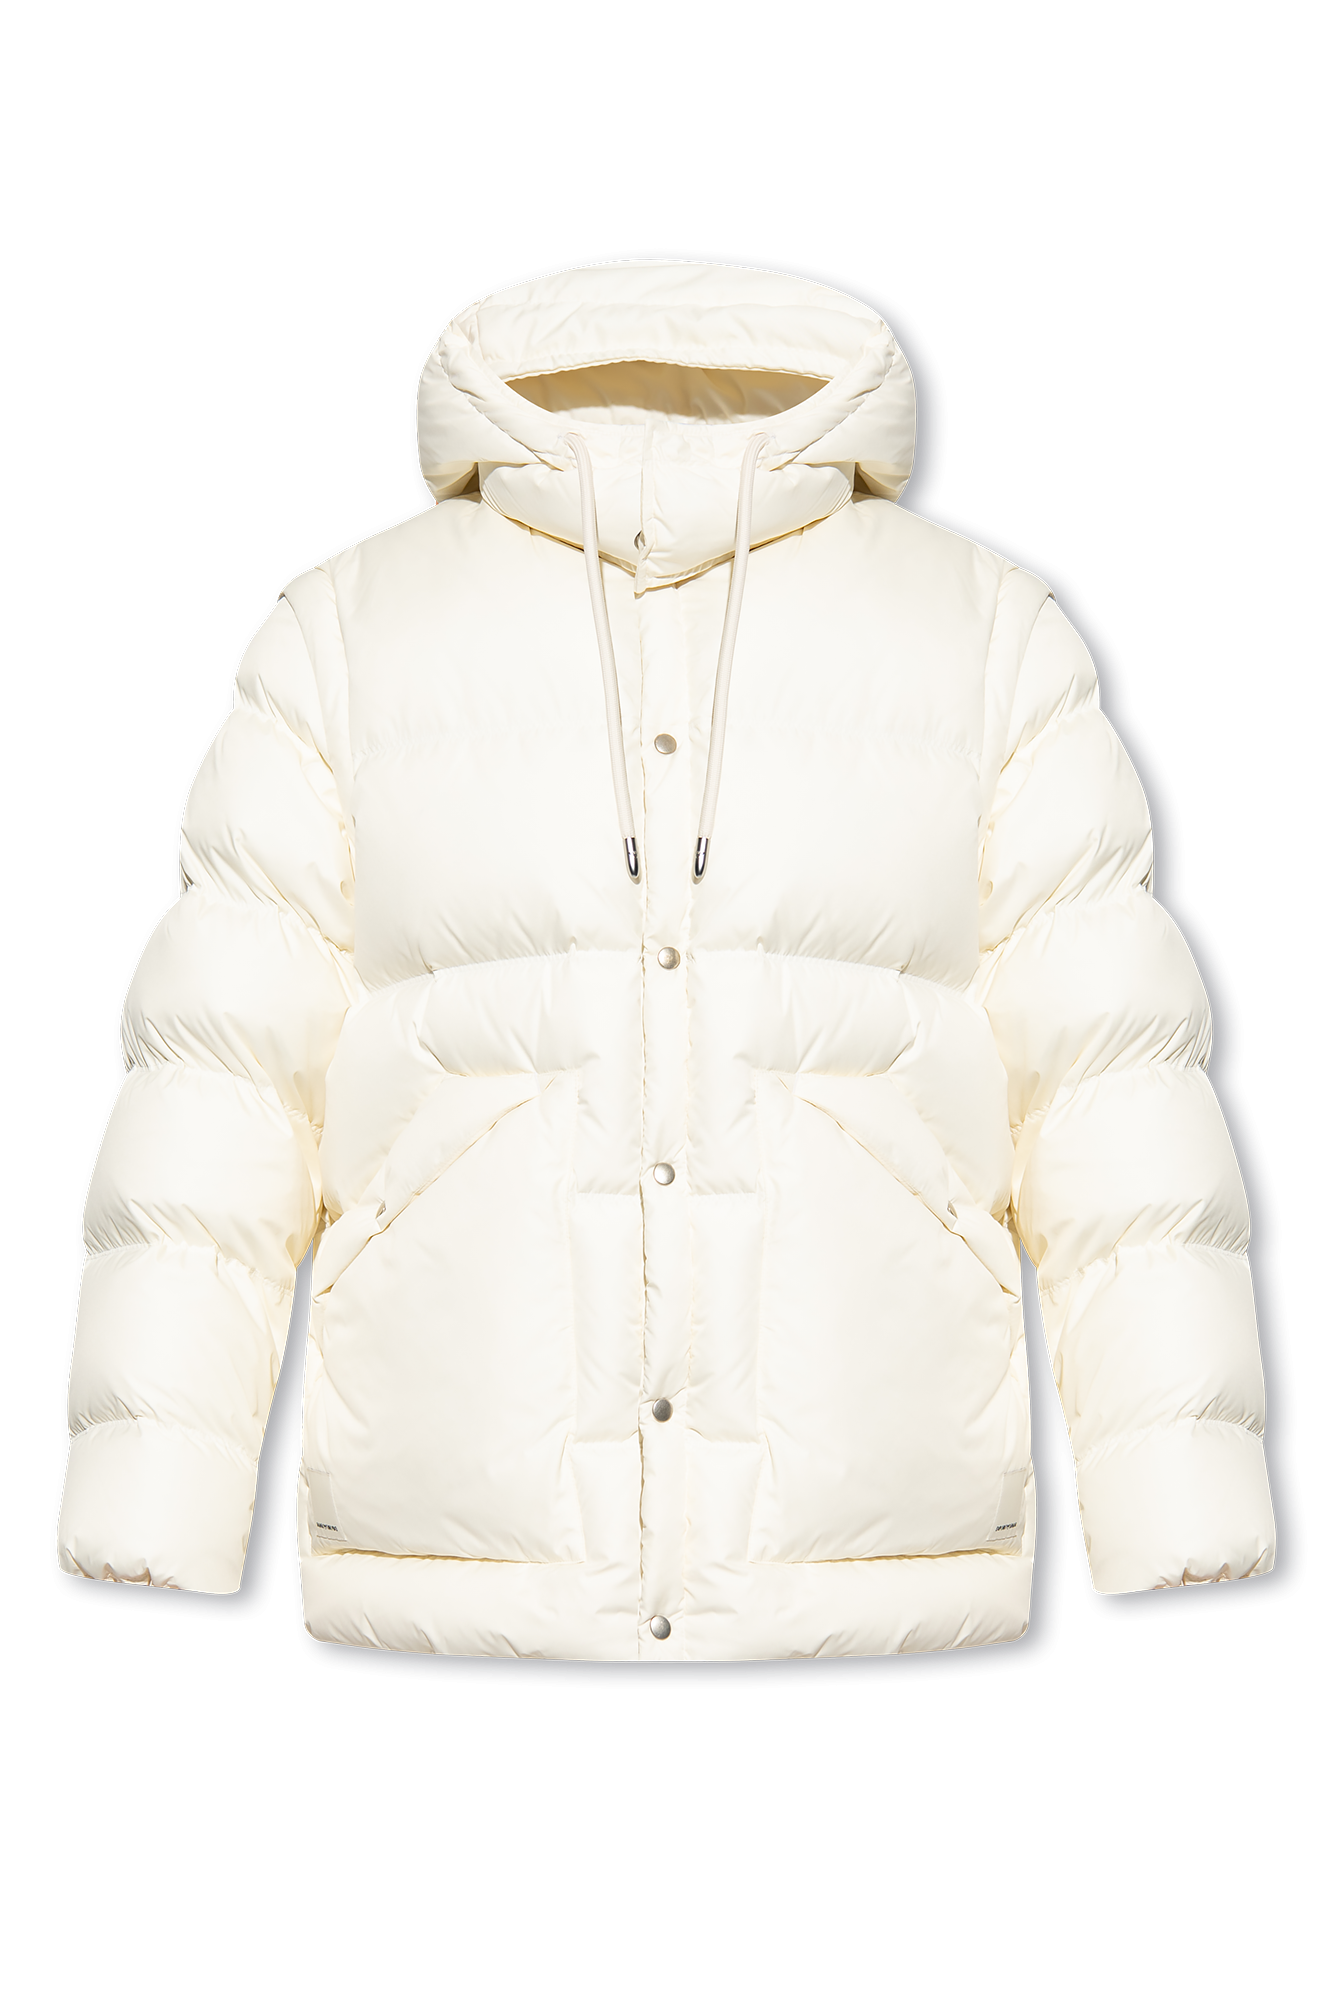 Emporio Sea armani Down jacket with detachable sleeves